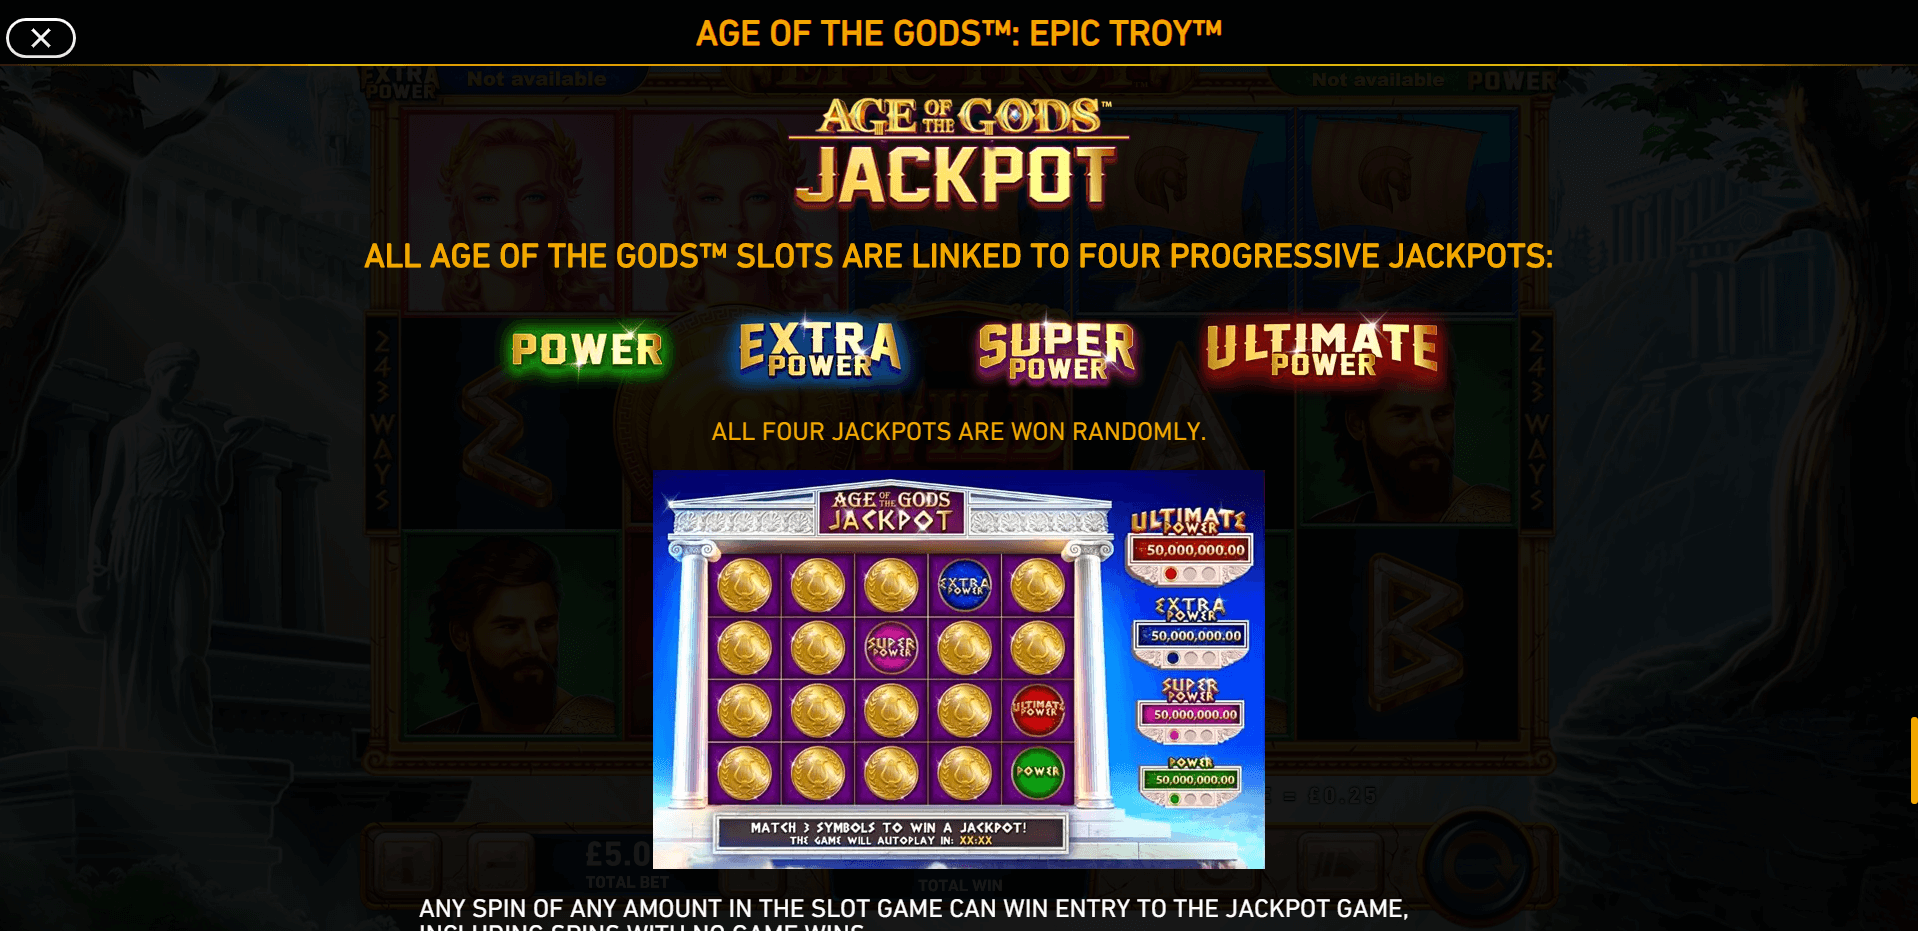 age of the gods epic troy slot machine detail image 8